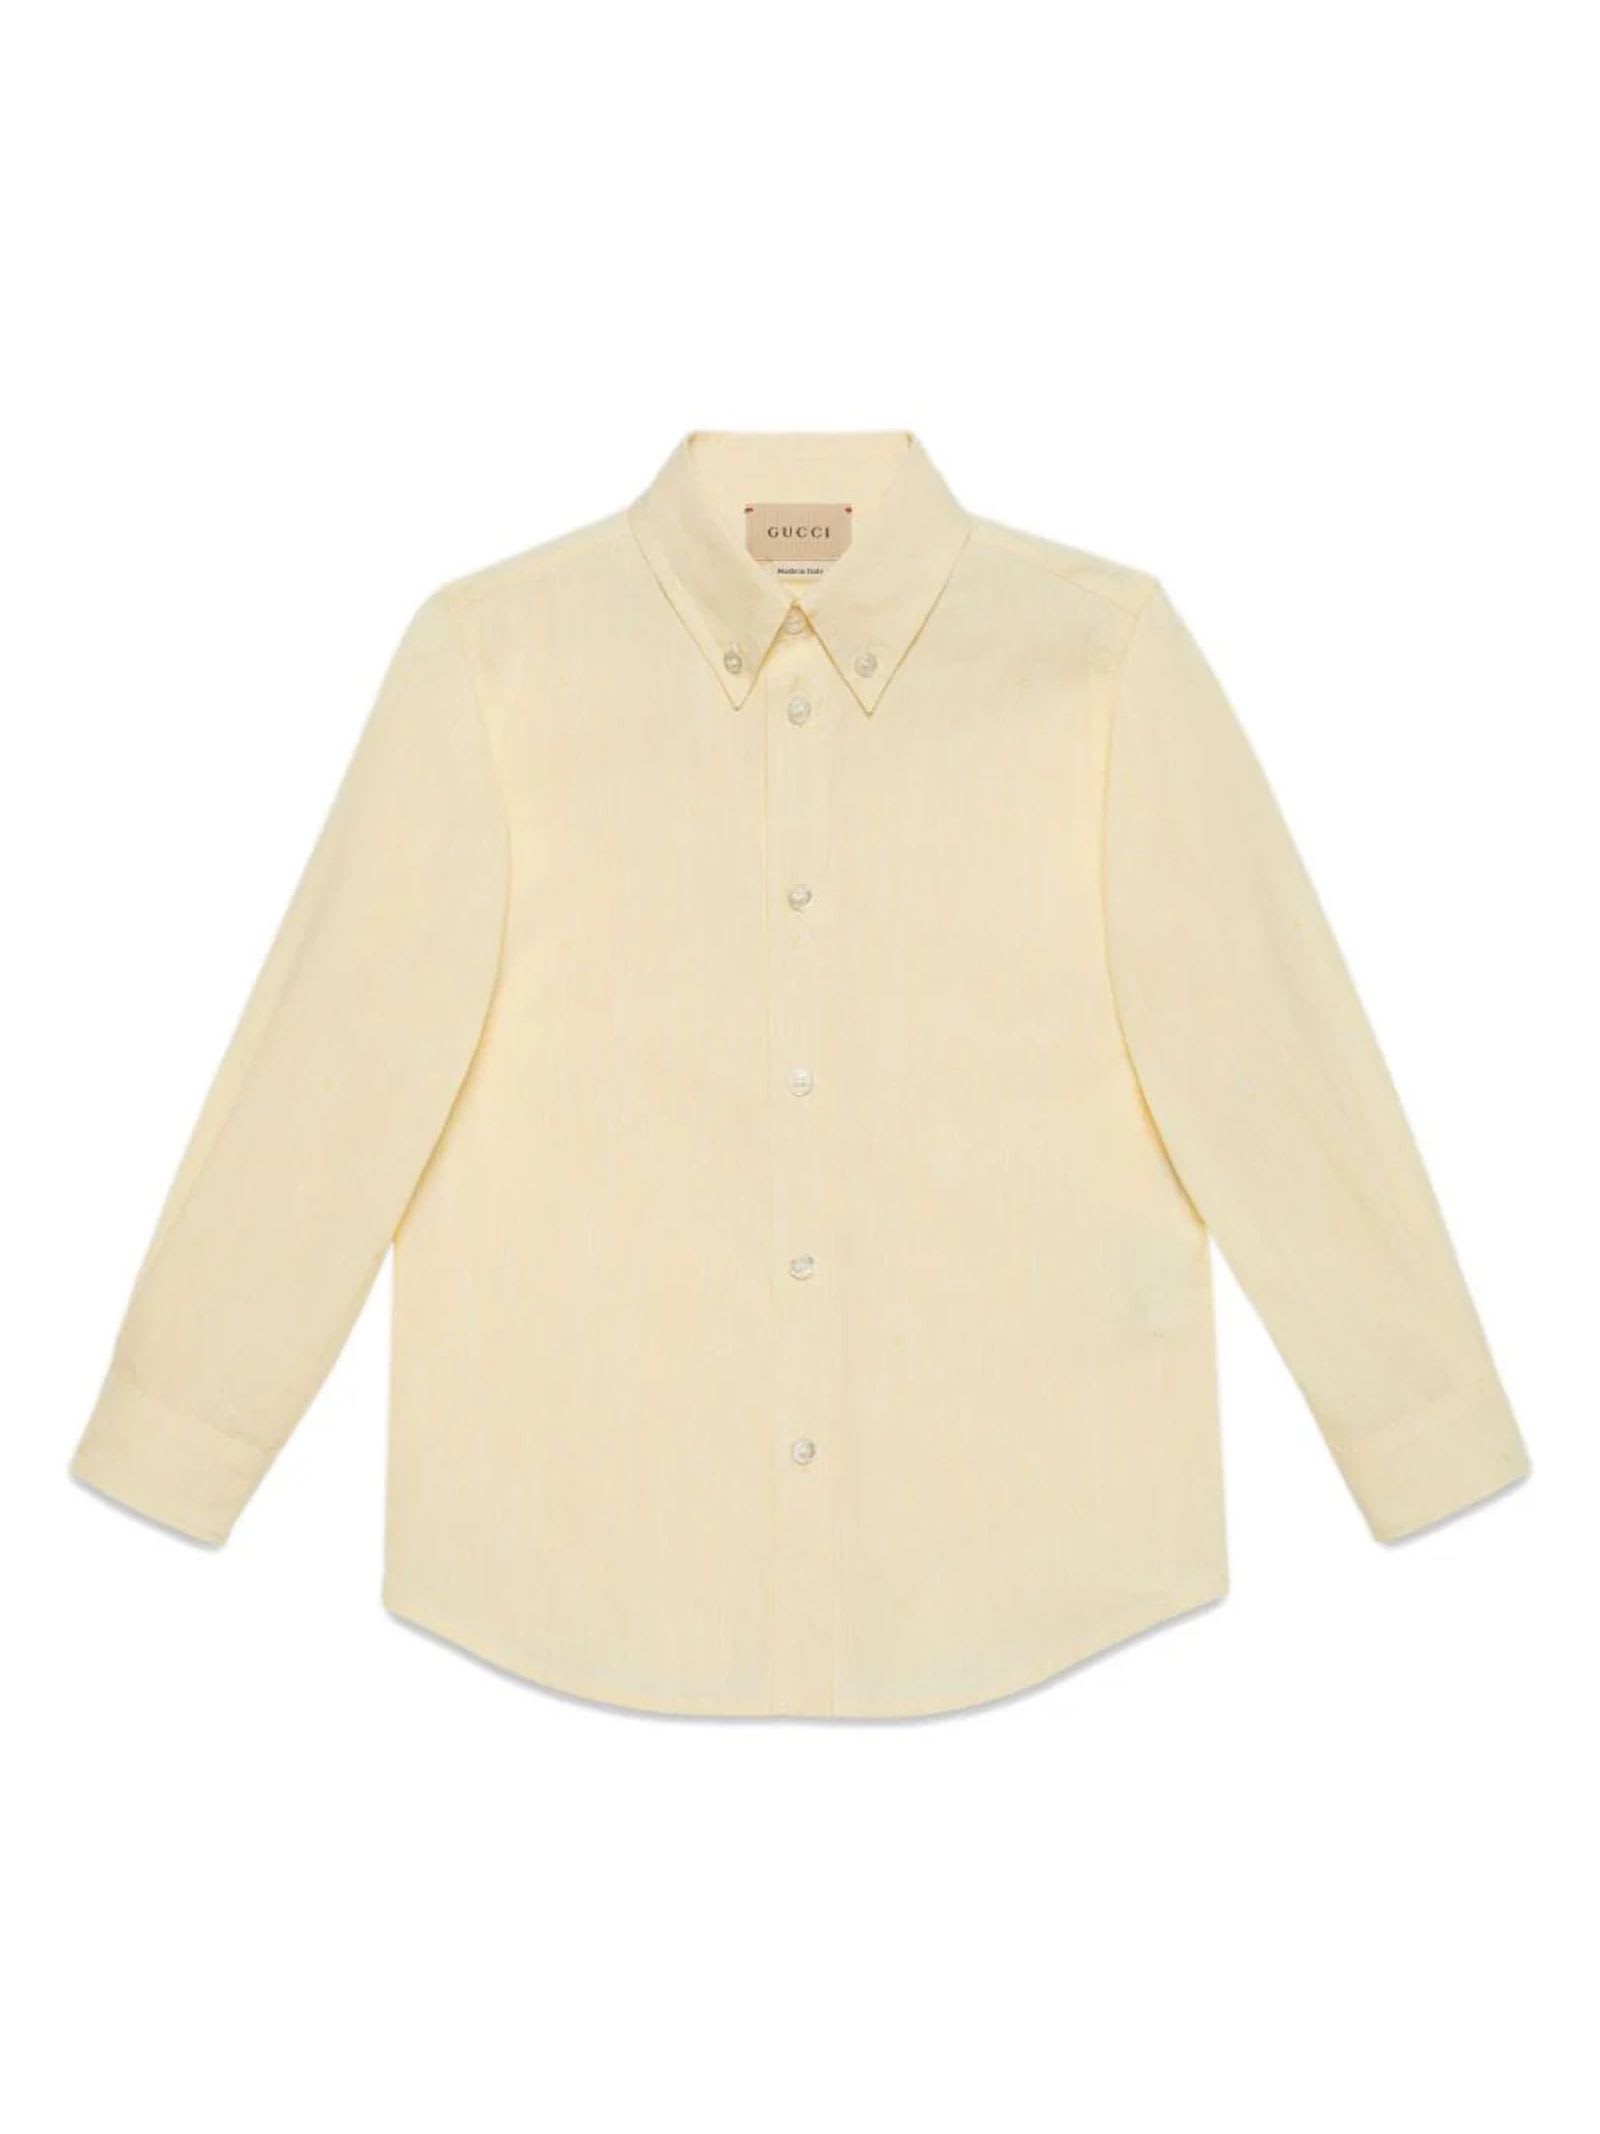 Gucci Kids' White Cotton Shirt In Yellow